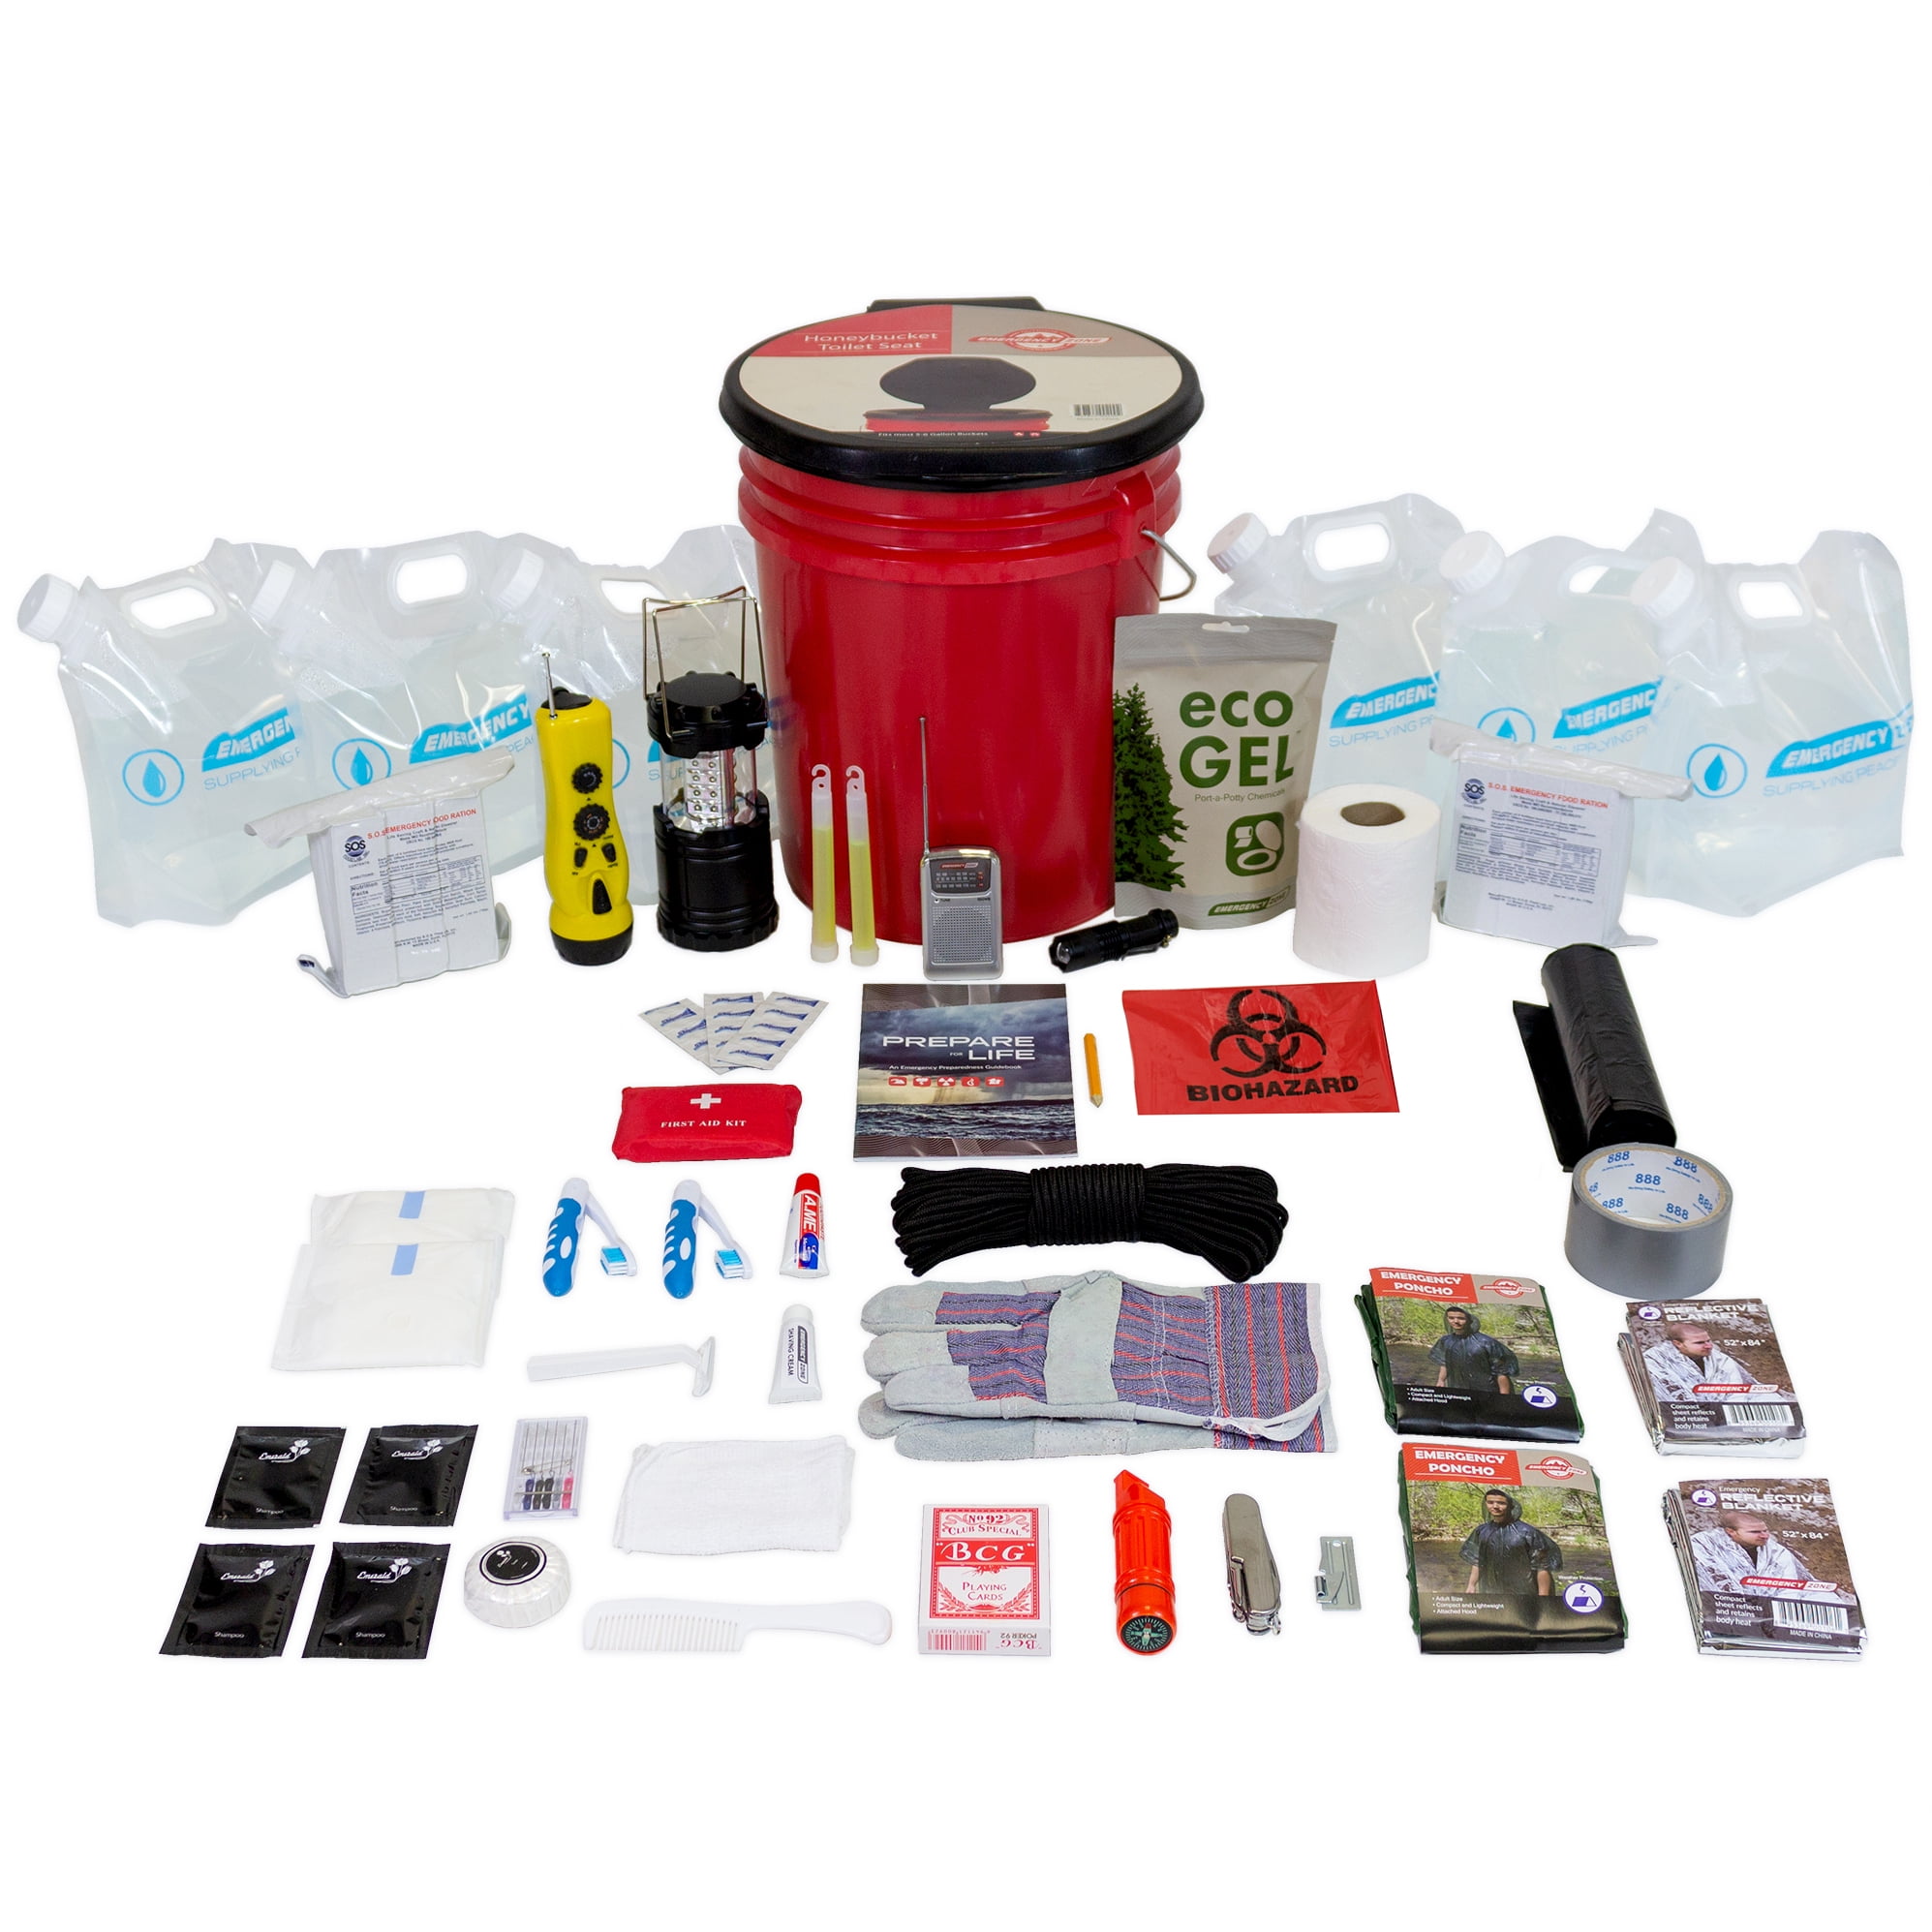 Suitable Survival Kits for Hurricane, Emergency Light for Storm